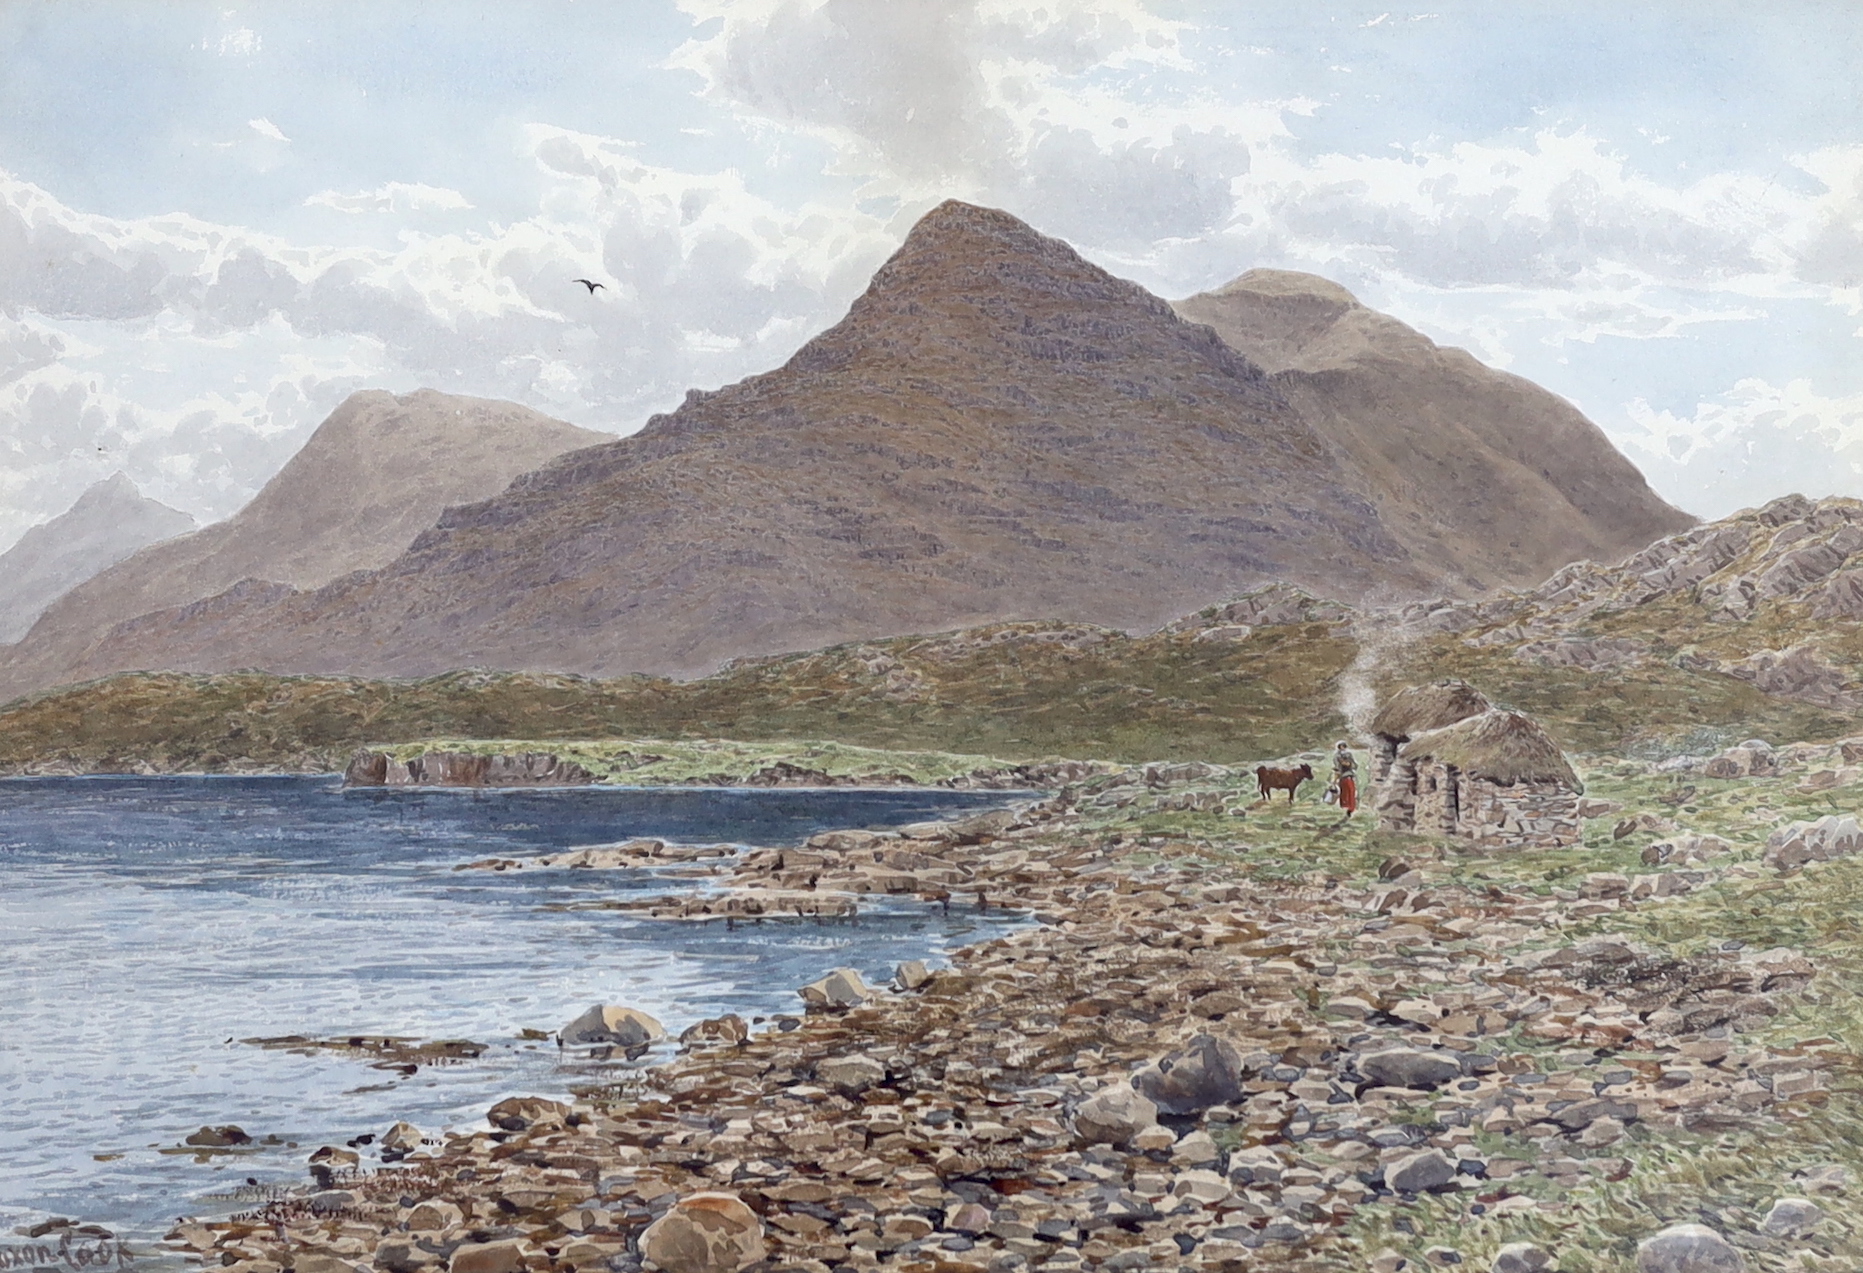 Herbert Moxon Cook (1844-1928), watercolour, Mountainous lakeside landscape with cottages, signed, 34 x 50cm